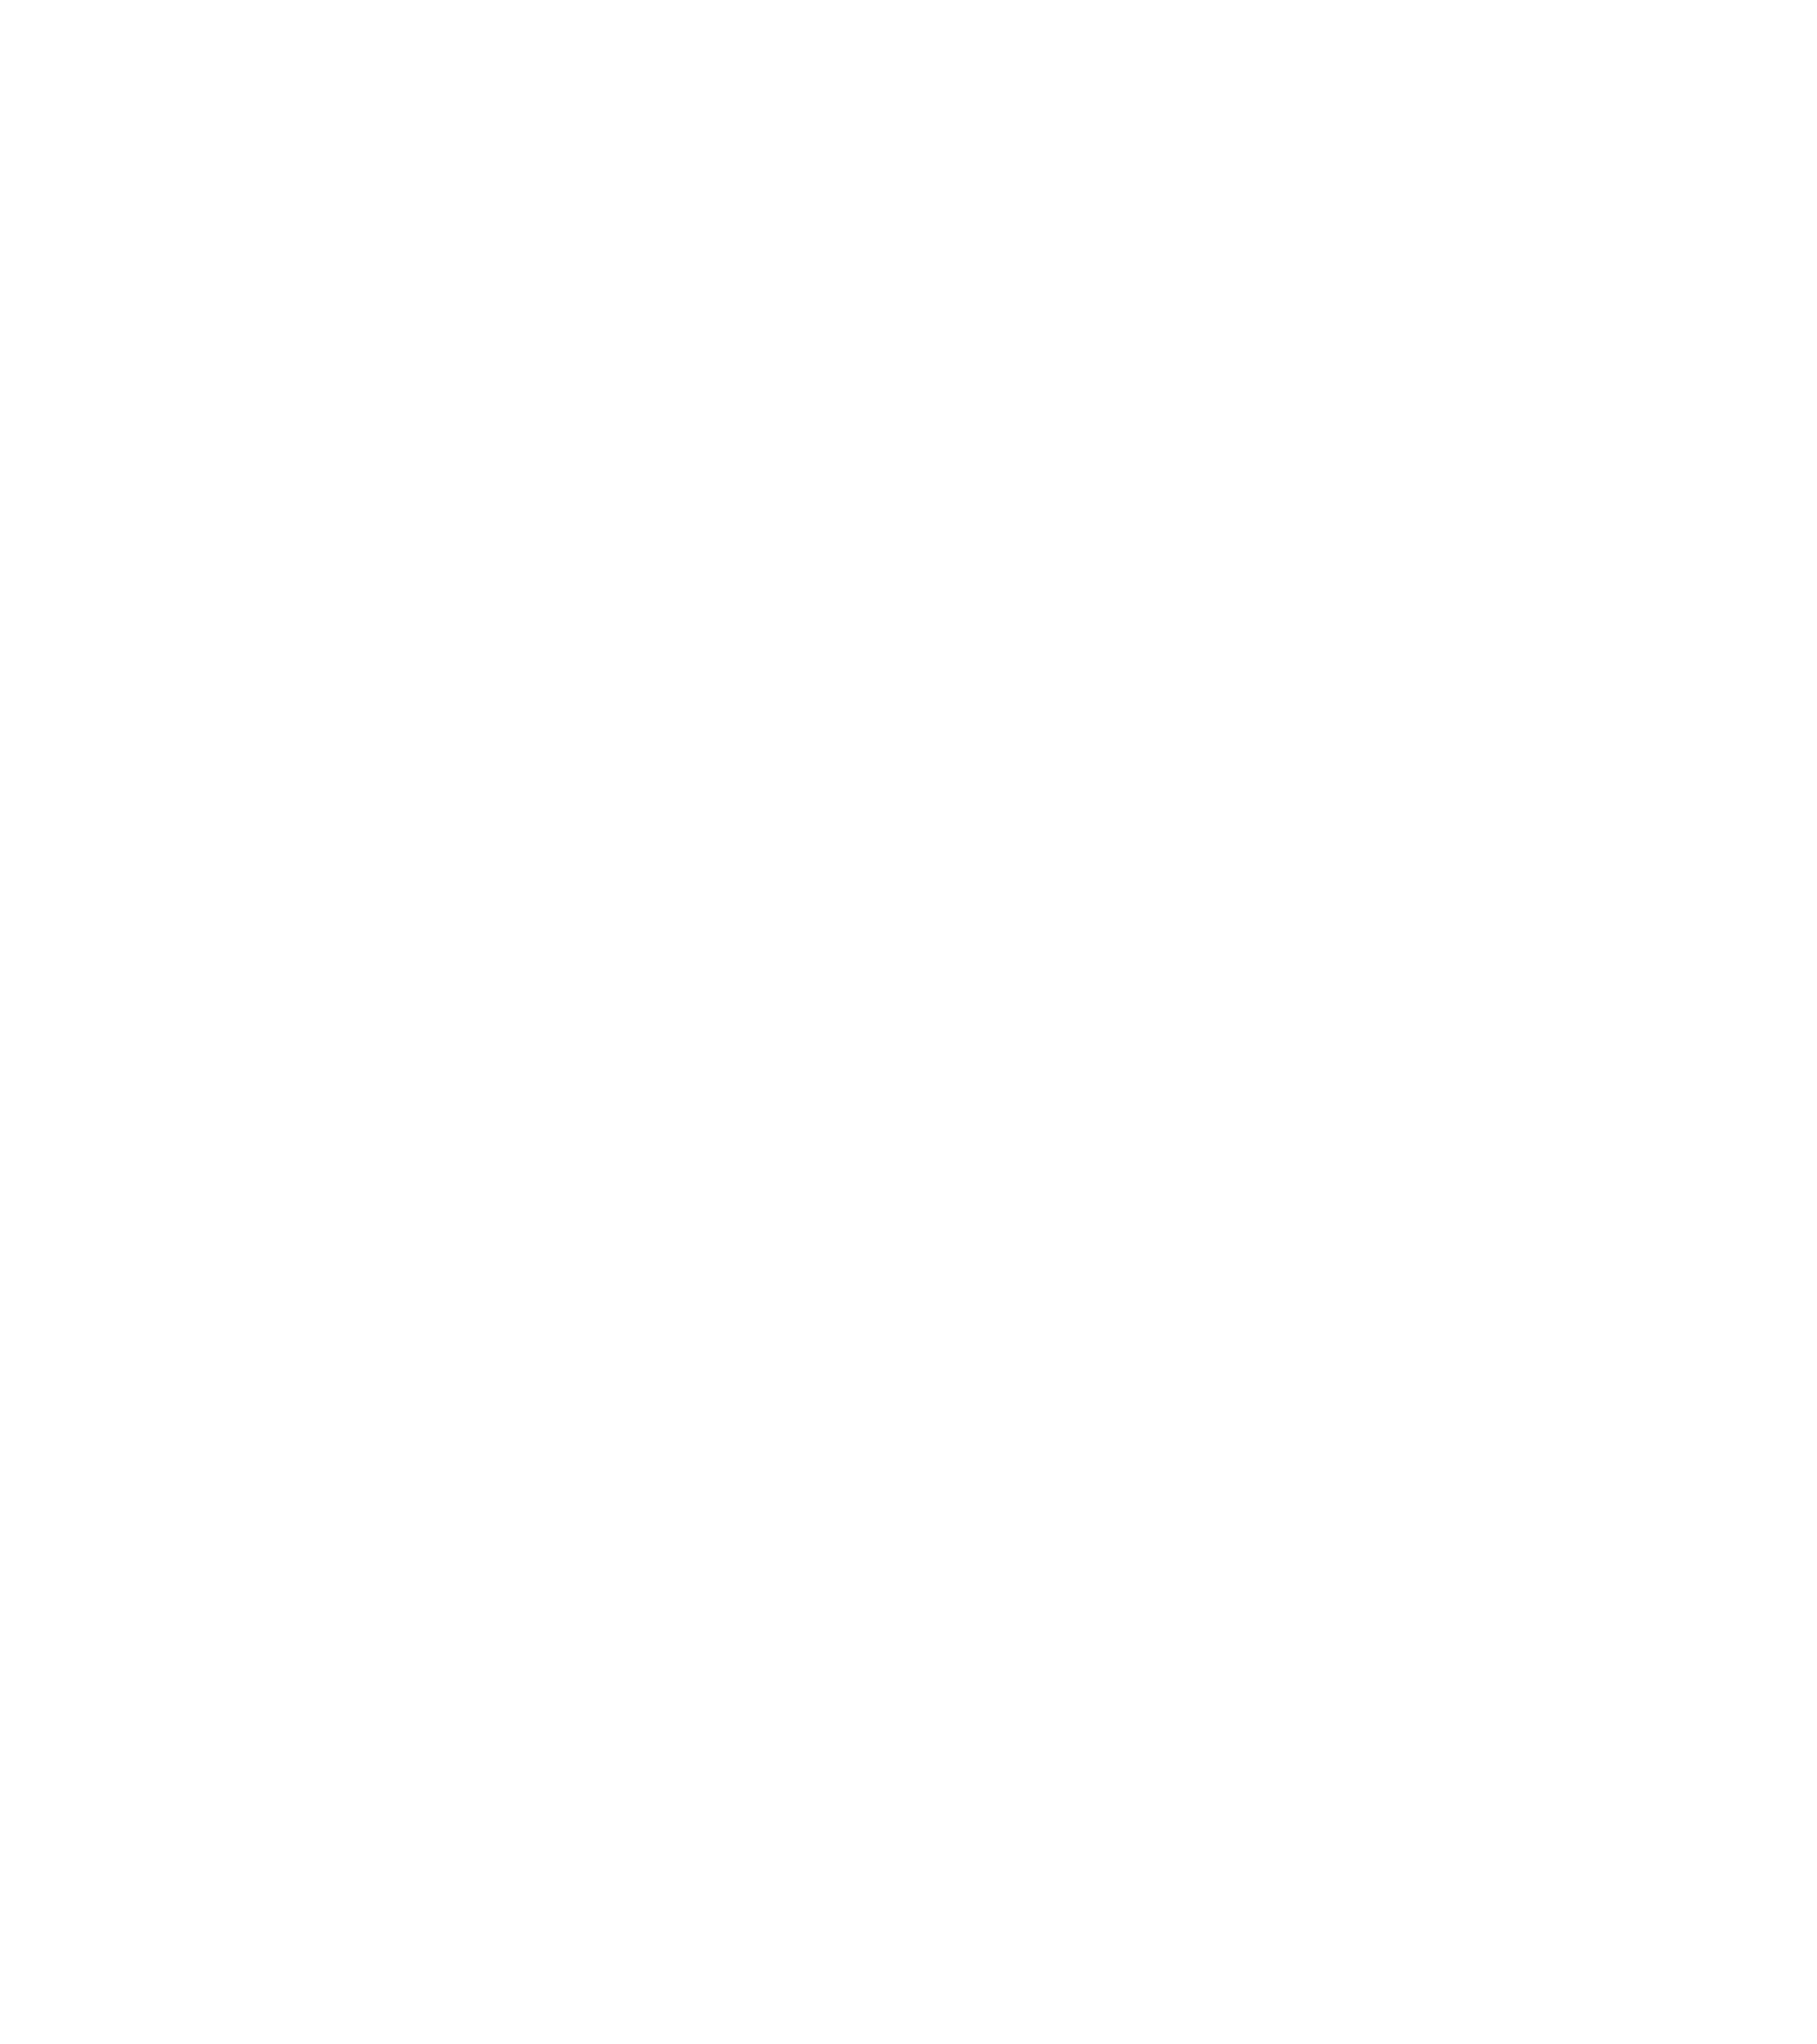 graphql-logo-black-and-white